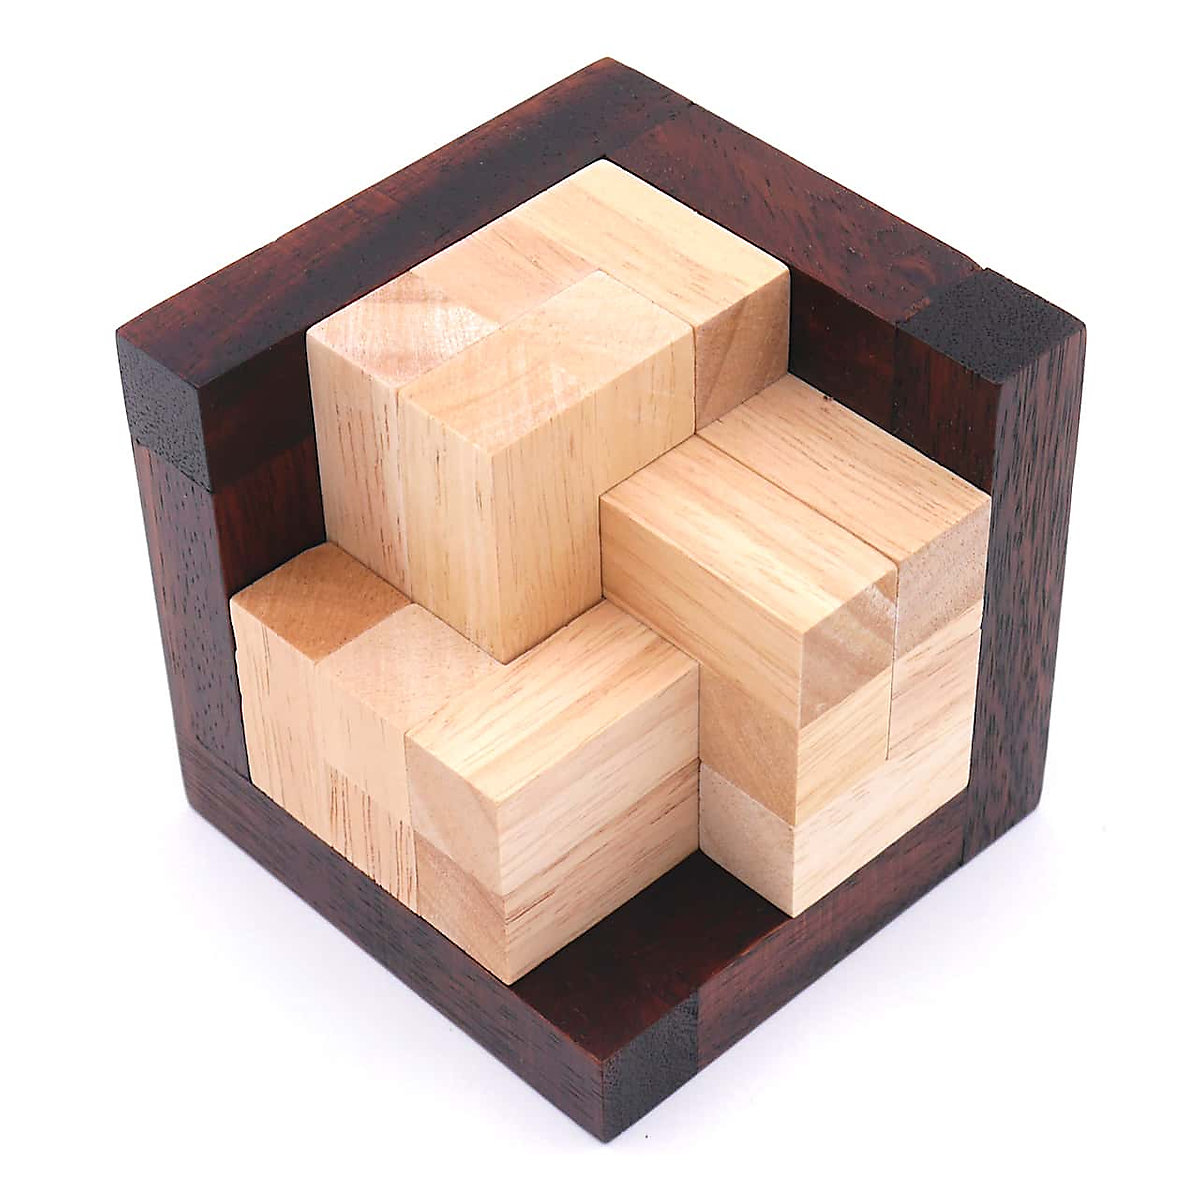 ROMBOL Open Crochet Cube ein anspruchsvolles Knobelspiel aus Holz